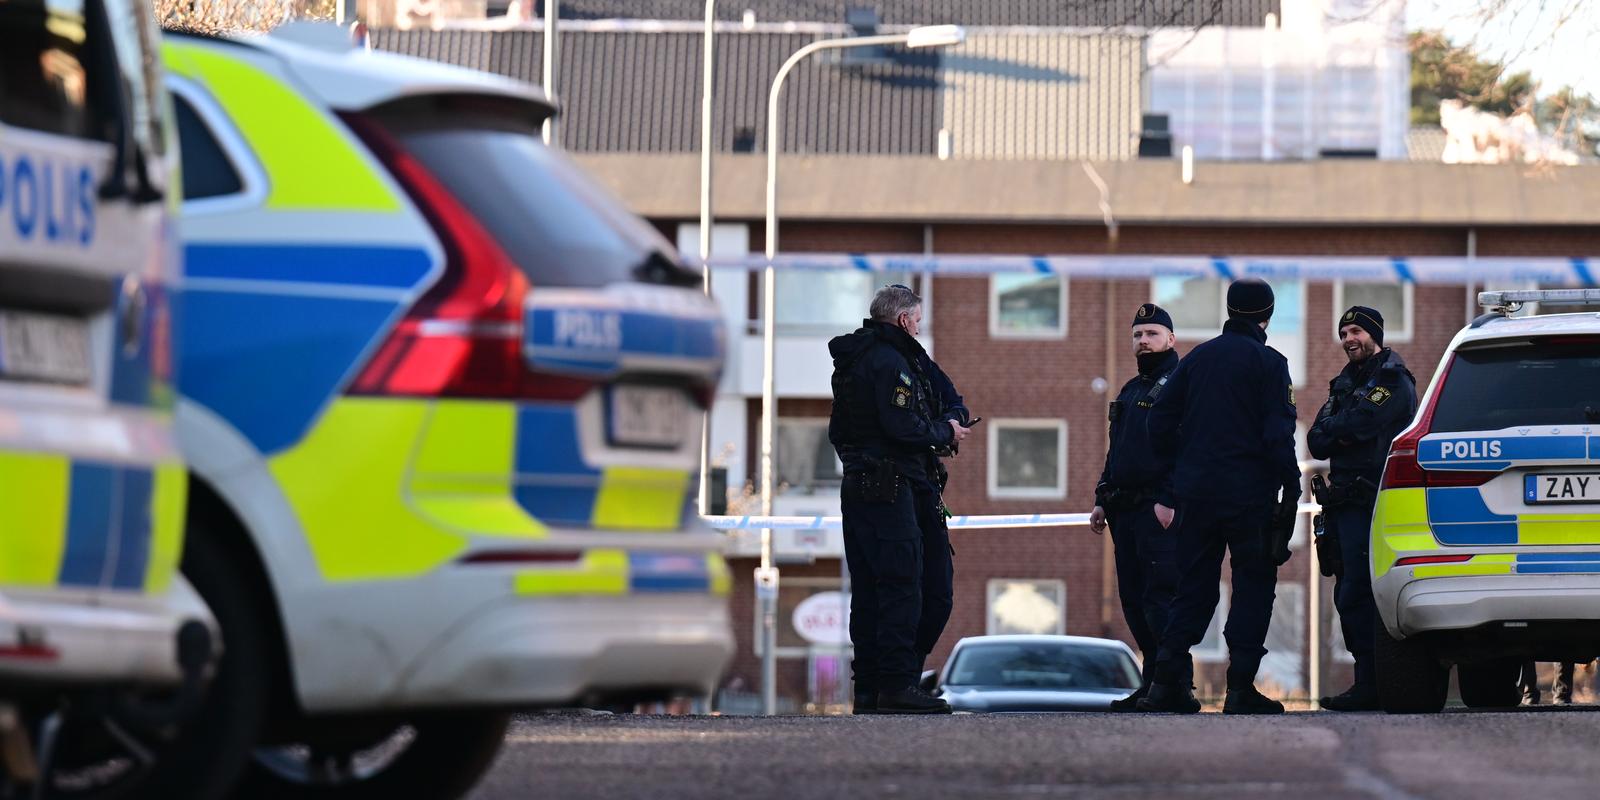 våldsvåg oroar i göteborg: ”stockholm i miniatyr”